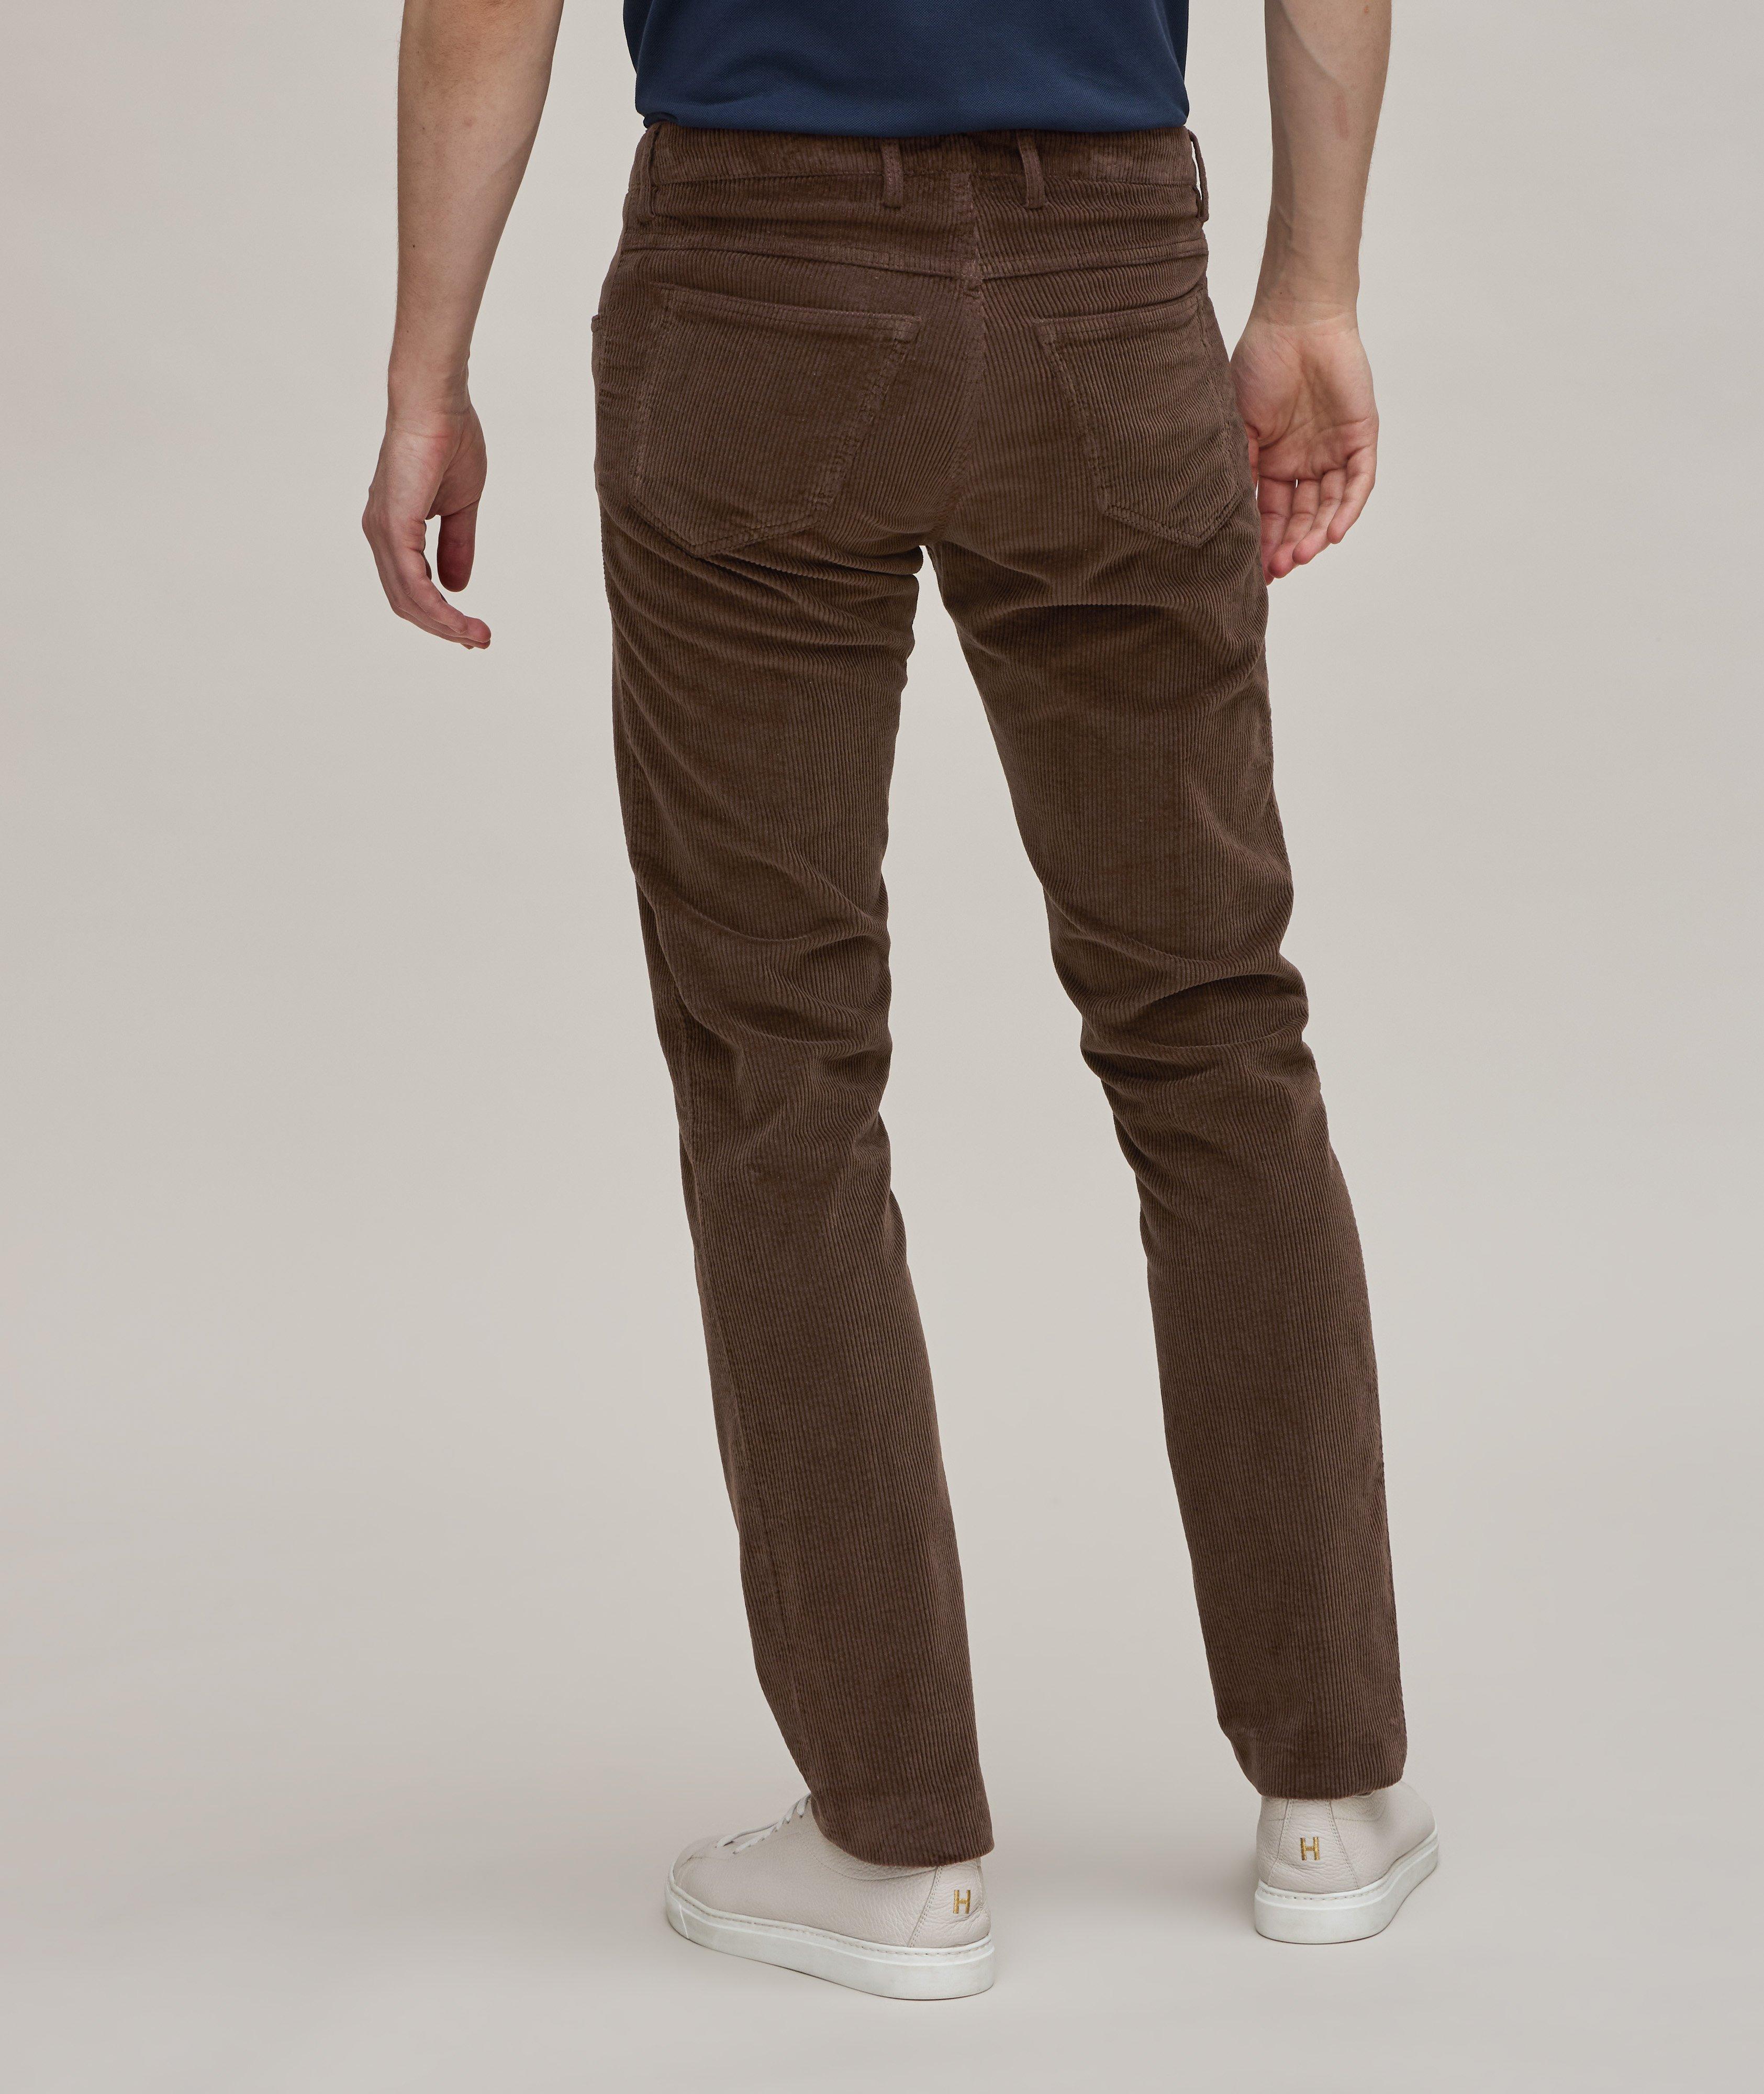 Corduroy Cotton-Blend Pants